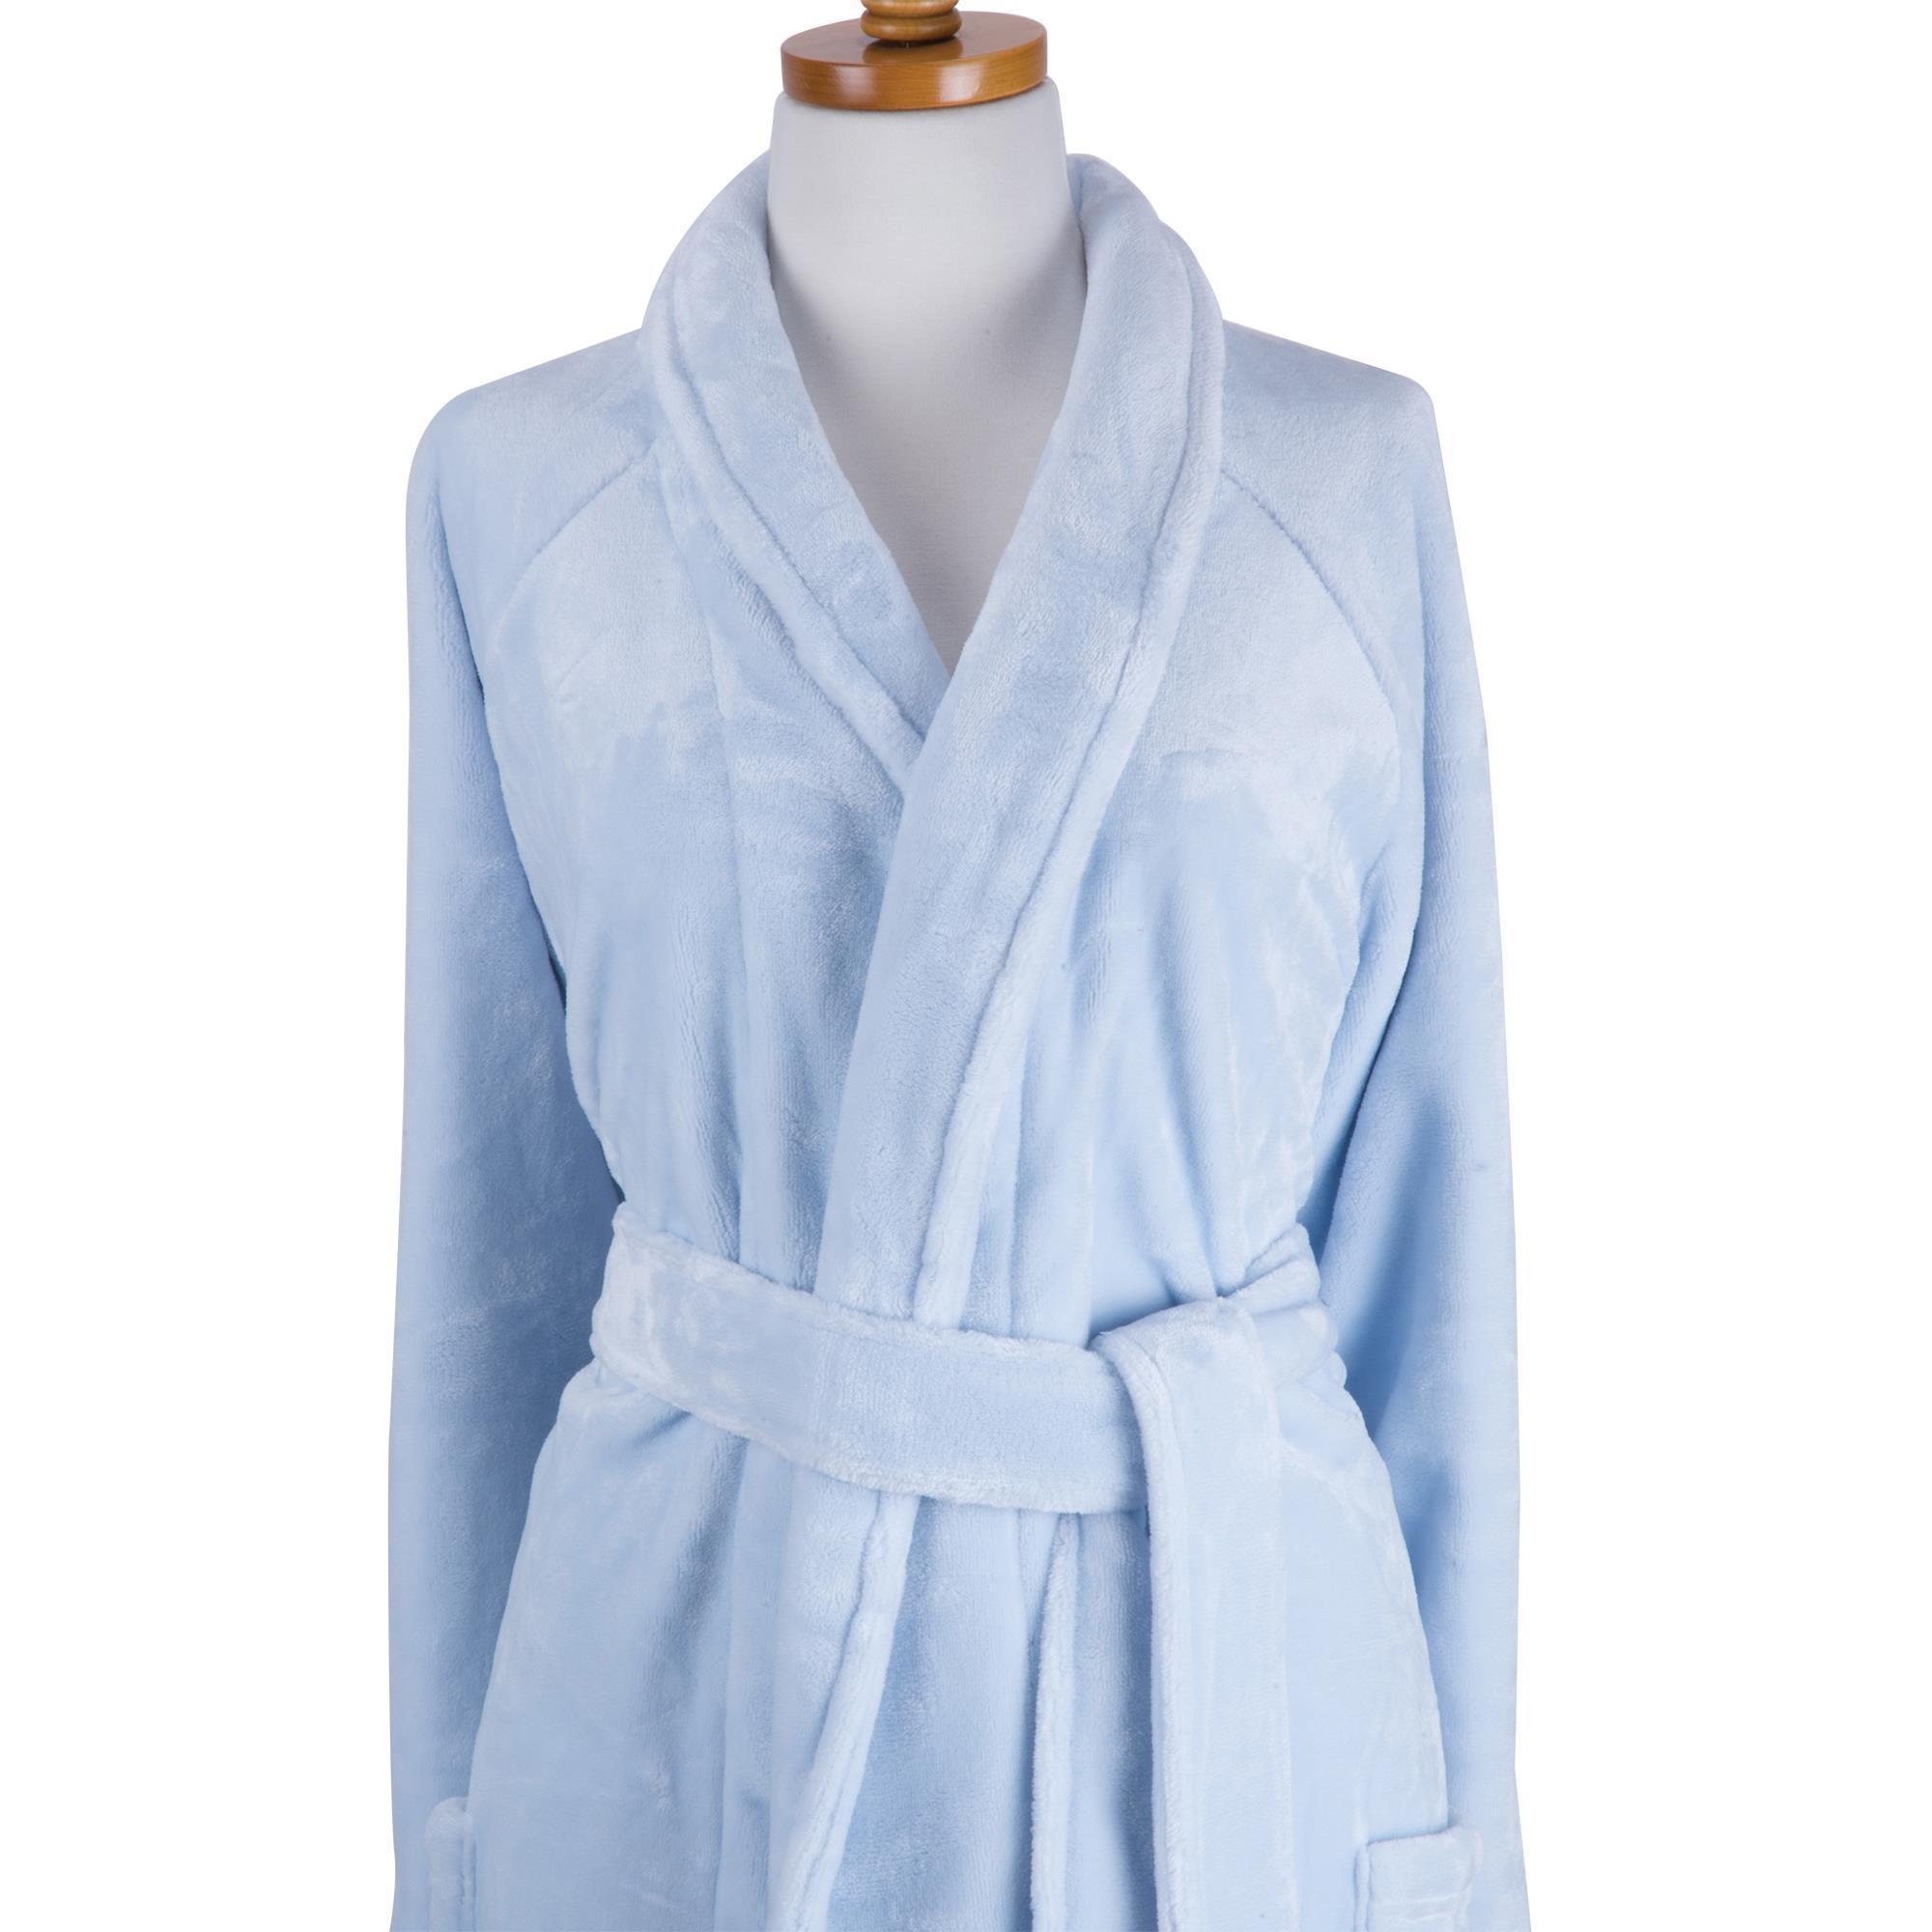 Robes & Wrapes Spa Blue Sposh Chelour Robe